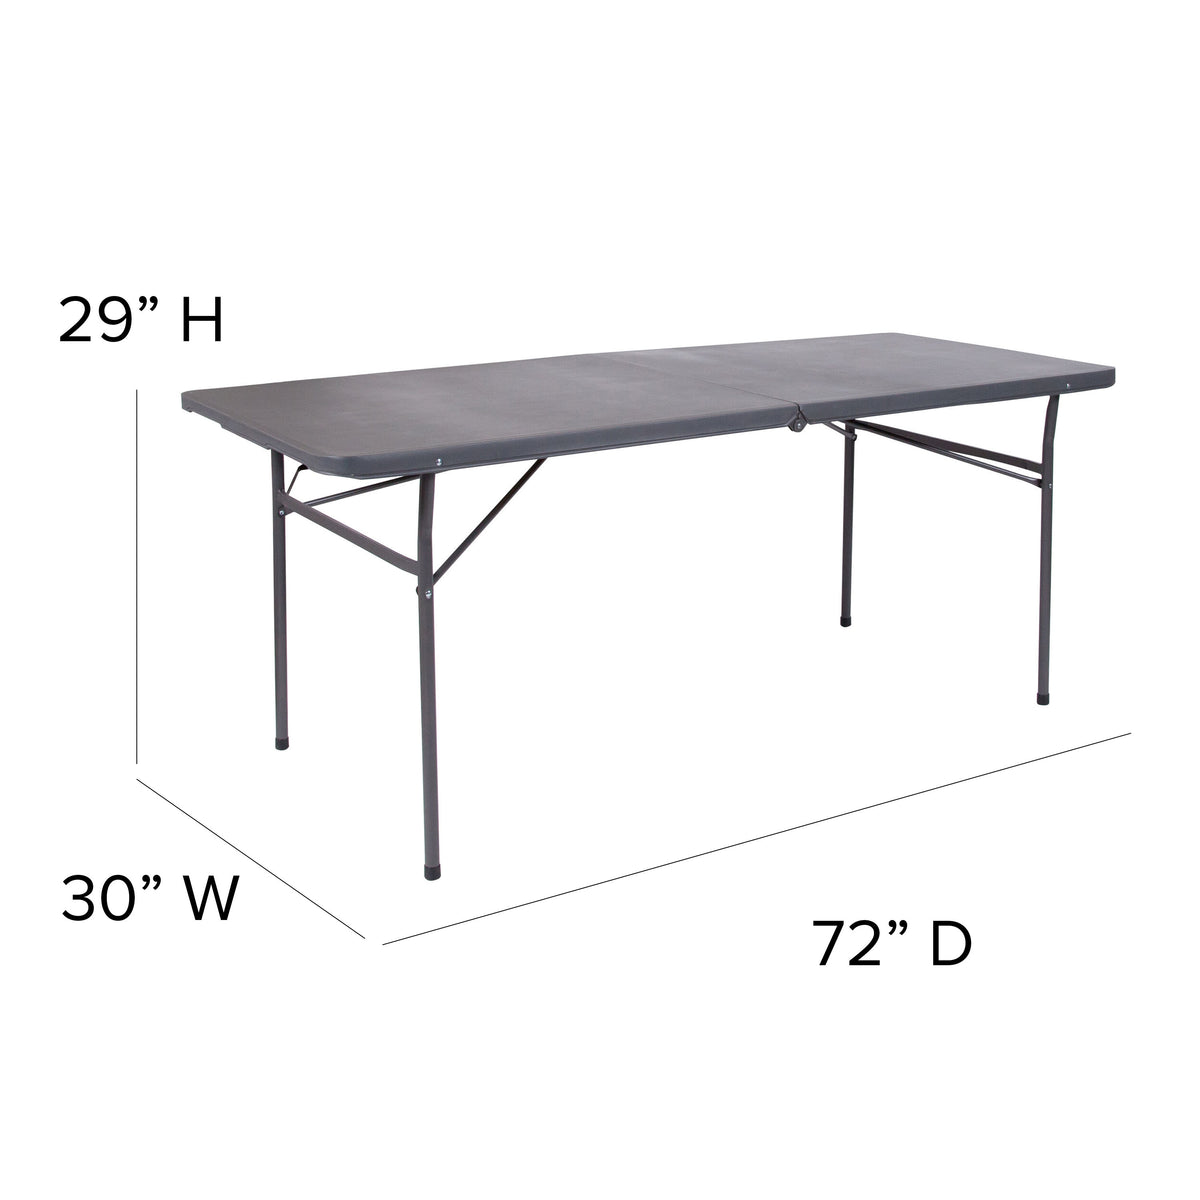 Dark Gray |#| 6-Foot Bi-Fold Dark Gray Plastic Folding Table with Carrying Handle